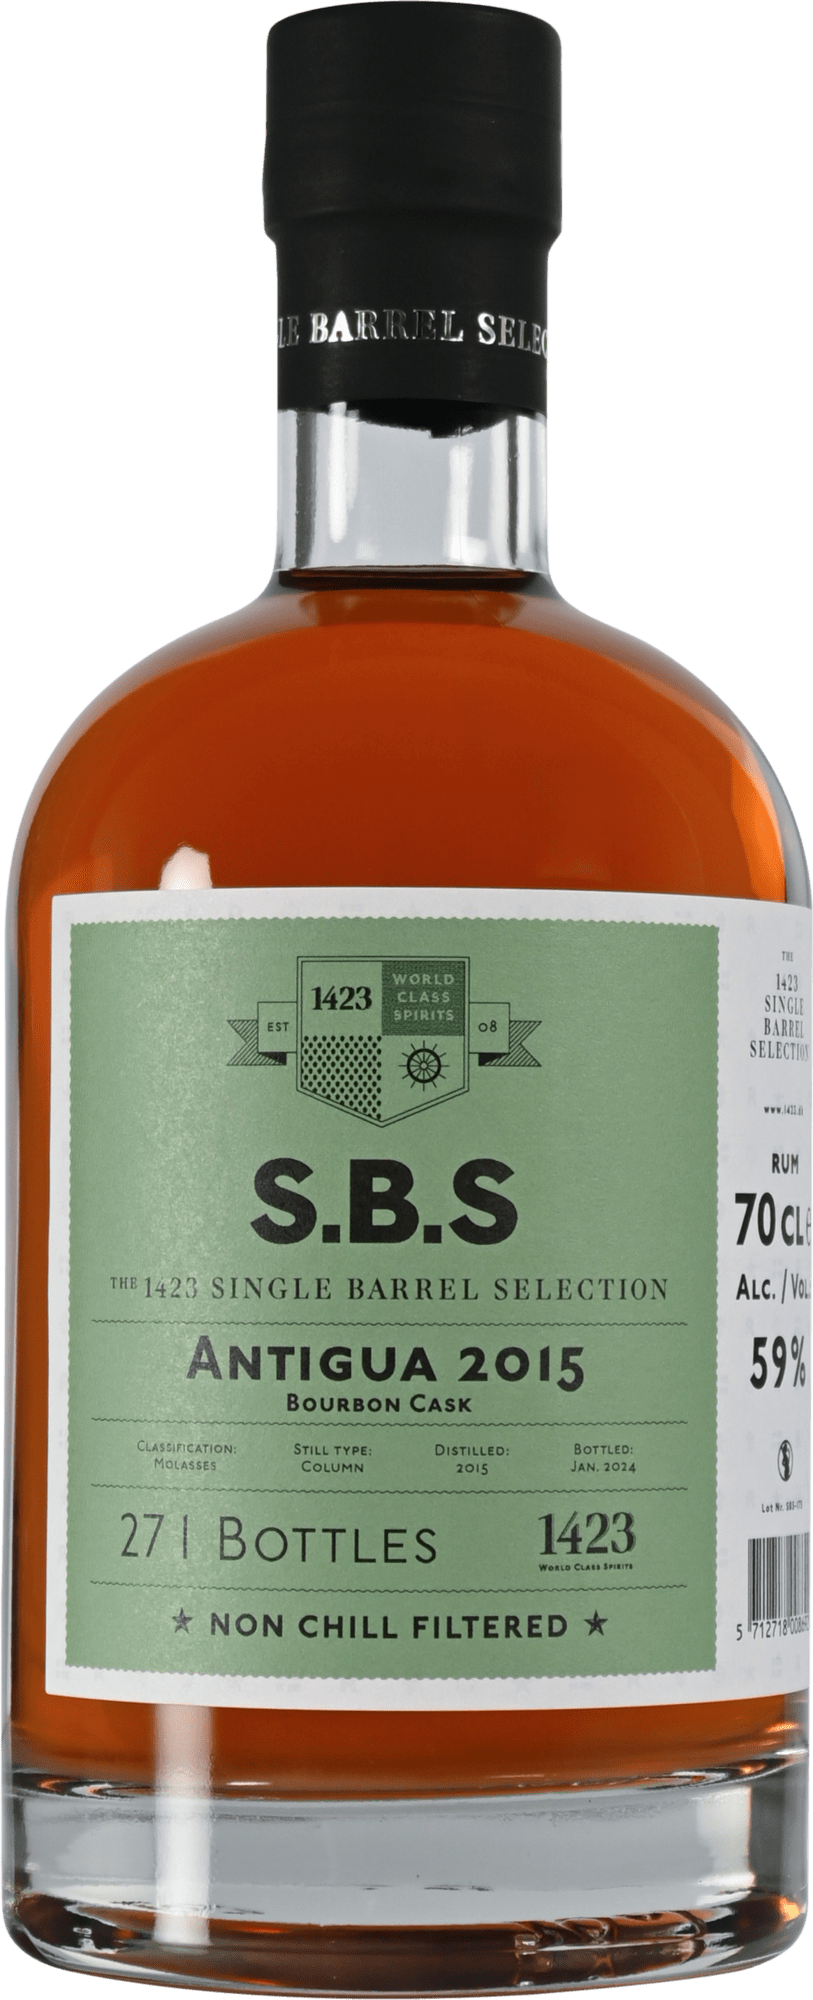 S.B.S Antigua 2015, GIFT